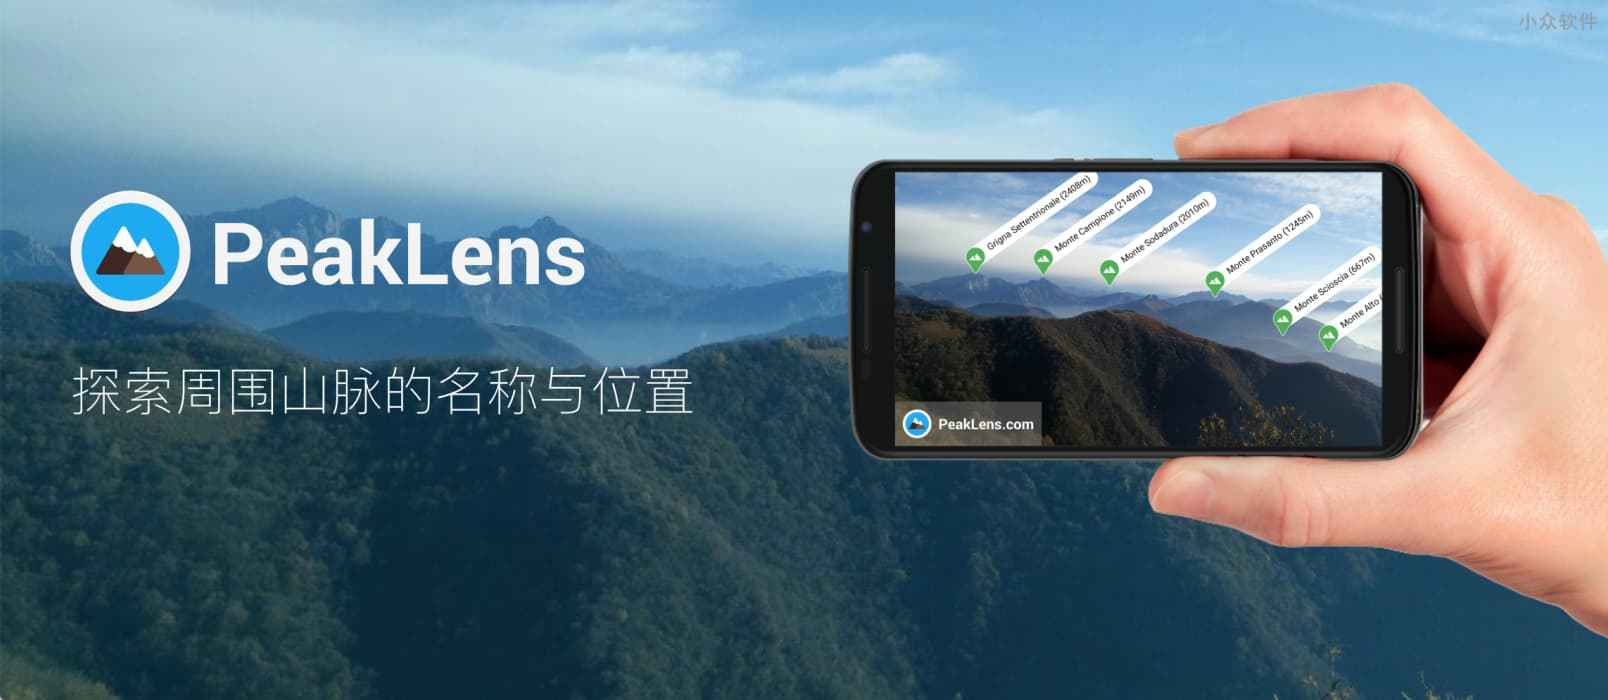 PeakLens – 实时准确识别山峰和山丘[Android]